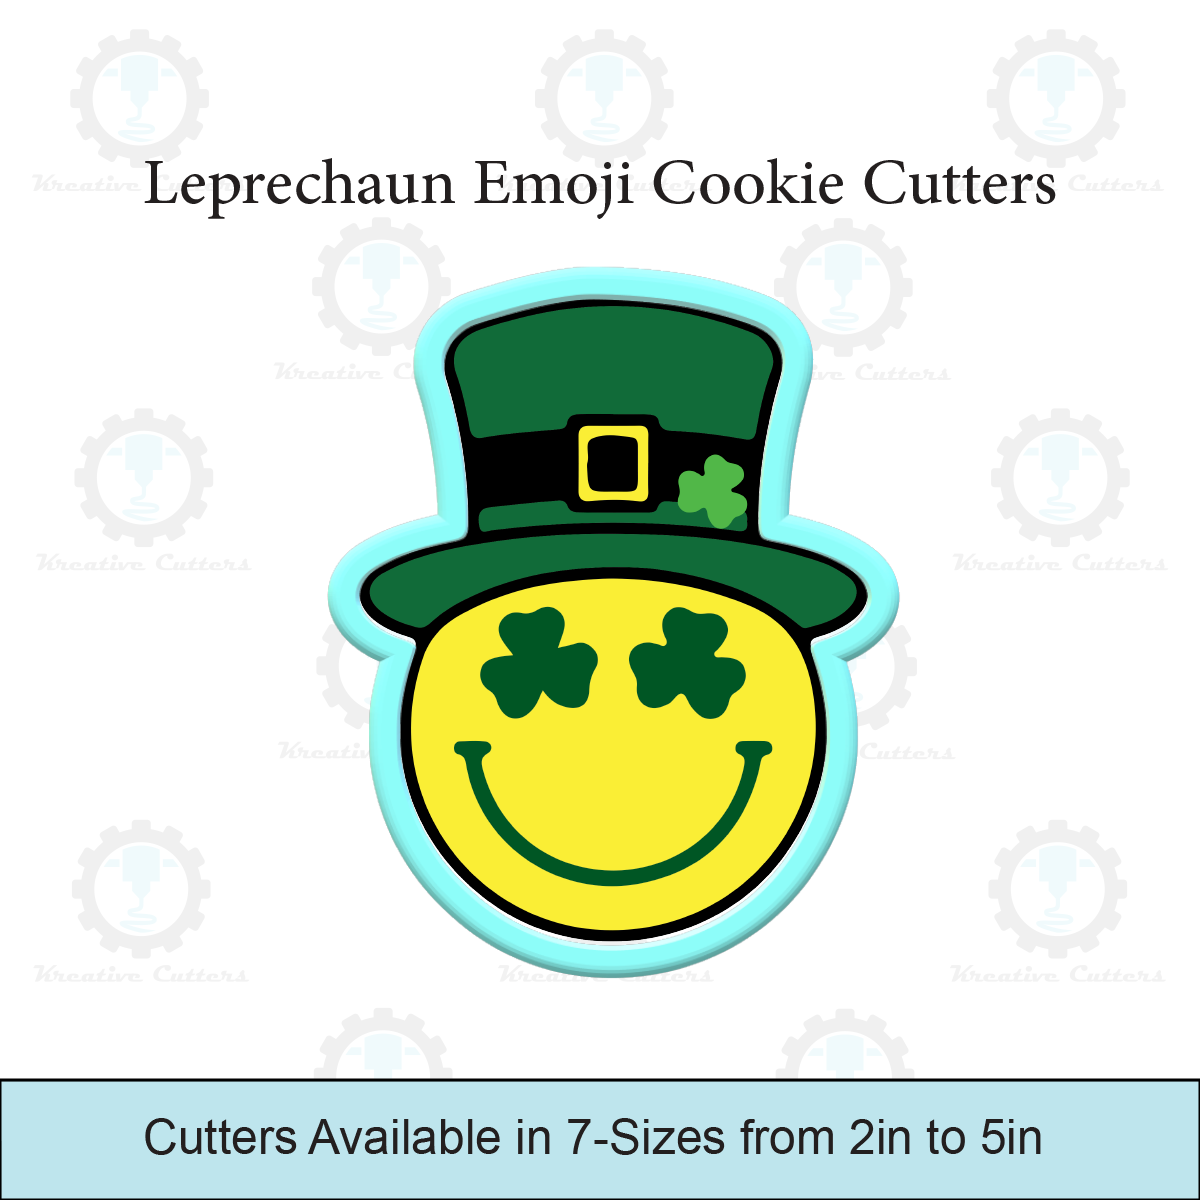 Leprechaun Emoji Cookie Cutters